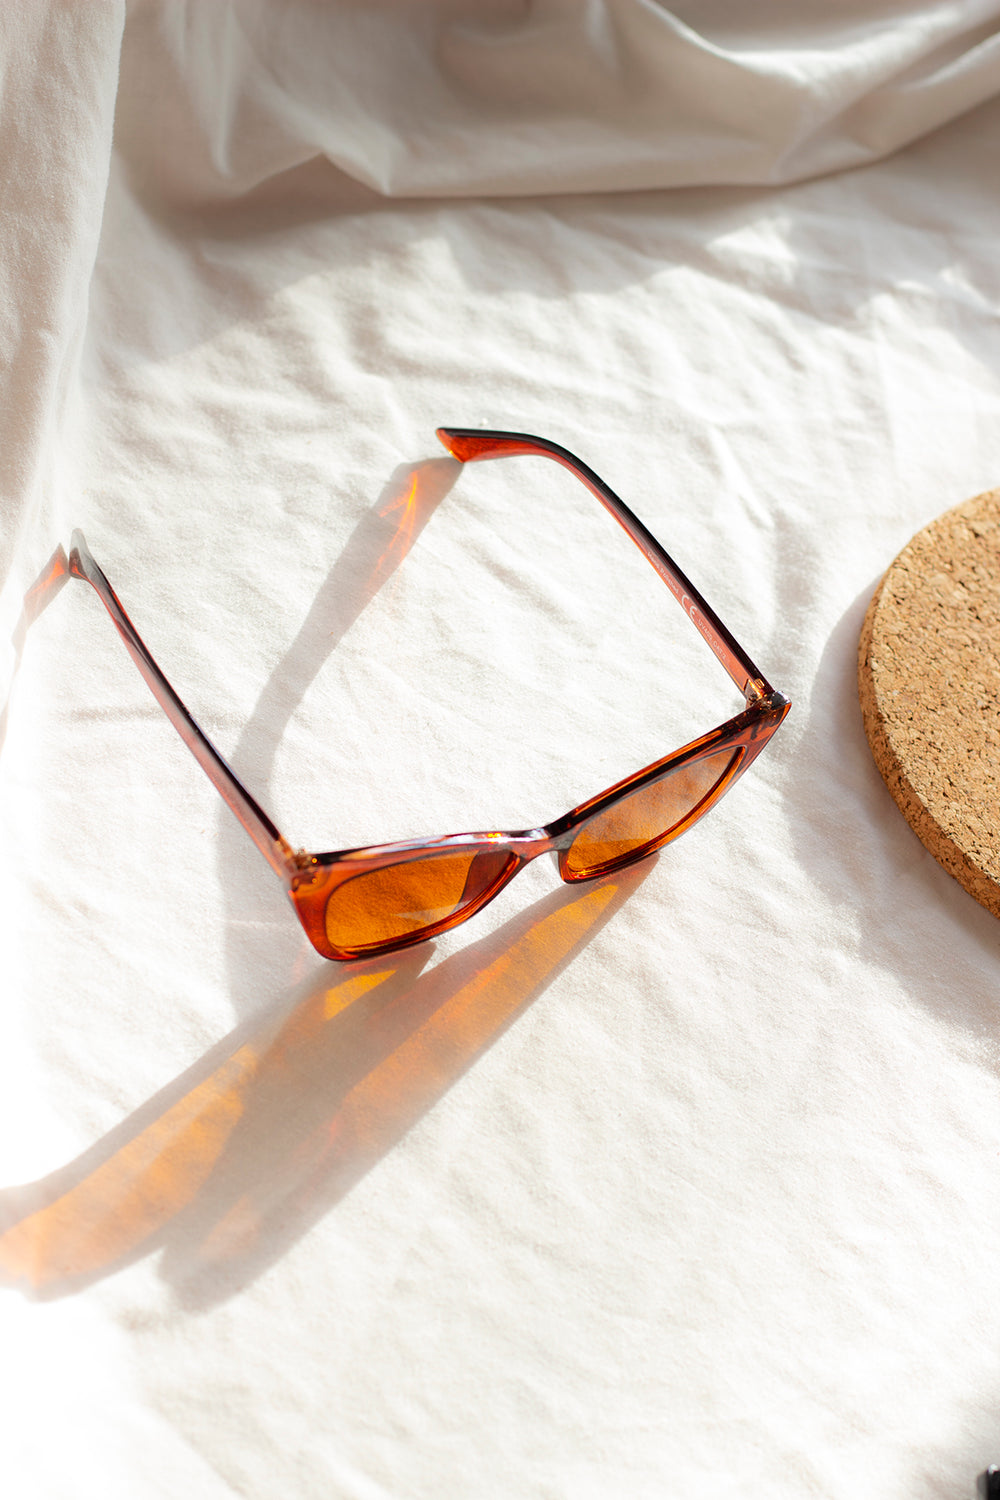 Wide Classic Cat Eye Sunglasses - Sugar + Style